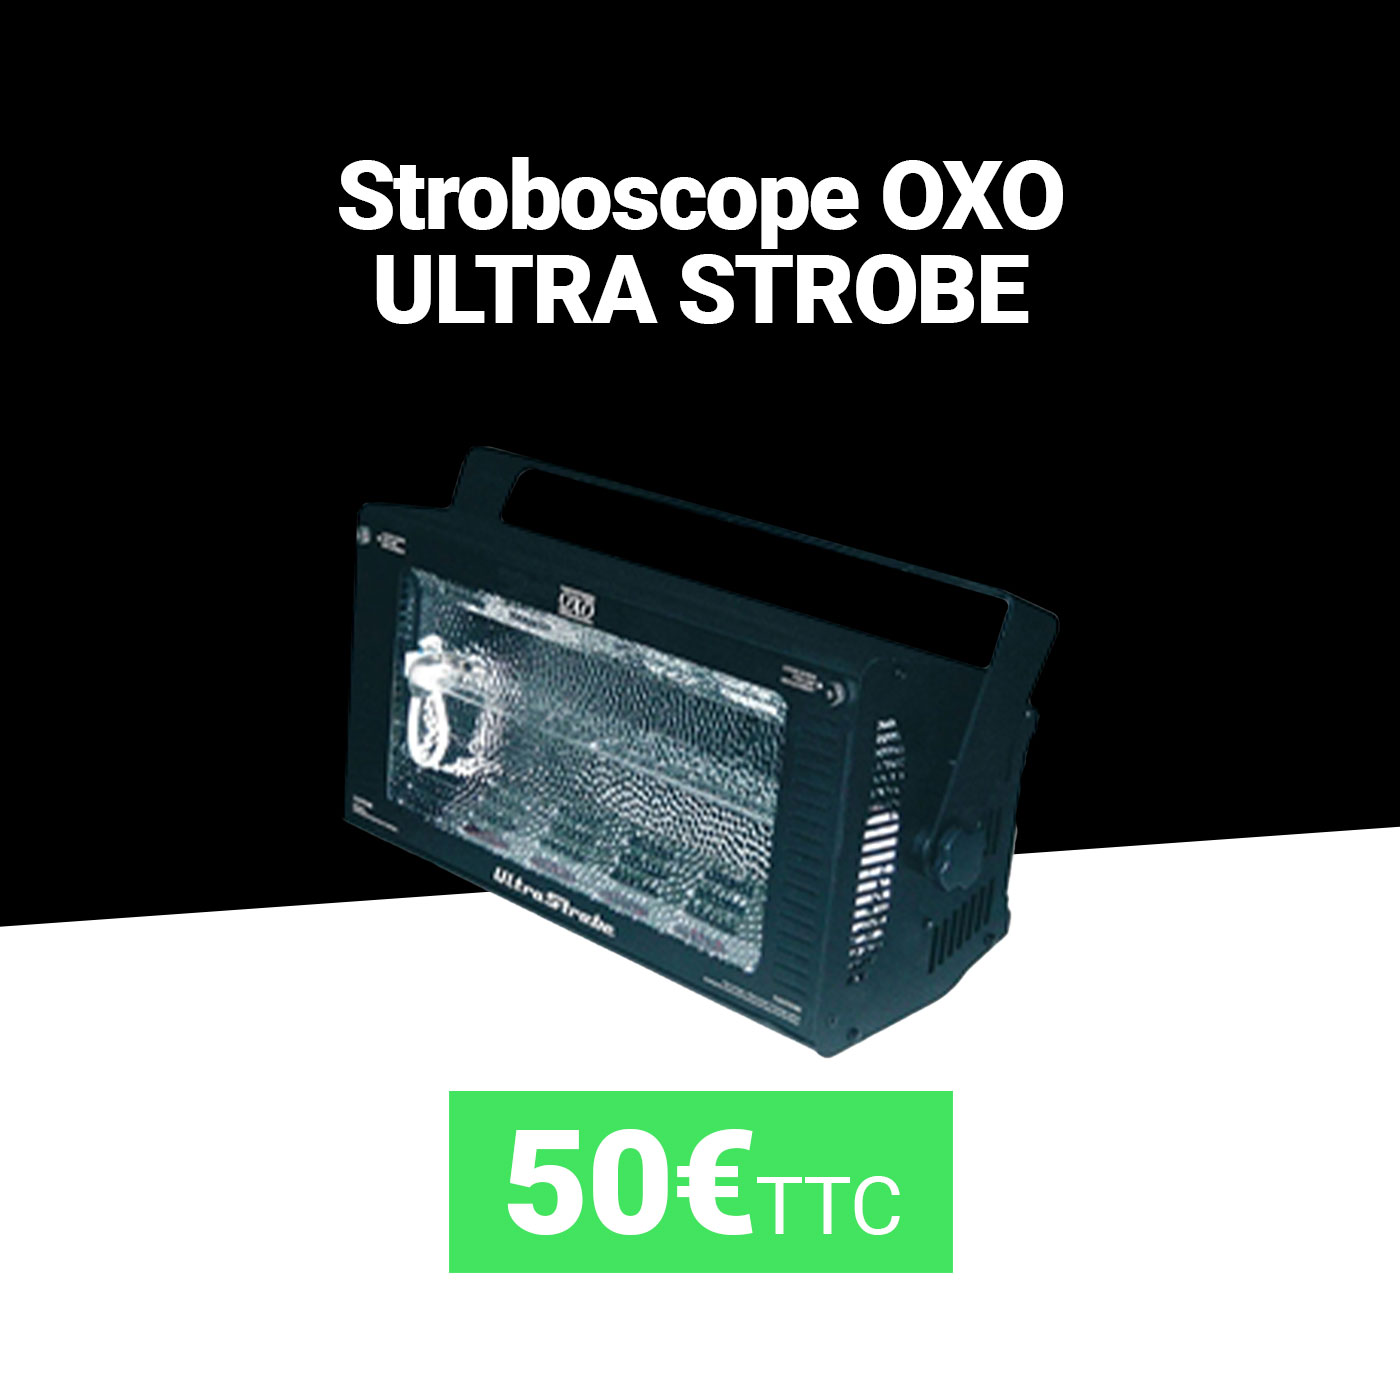 Stroboscope OXO ULTRA STROBE